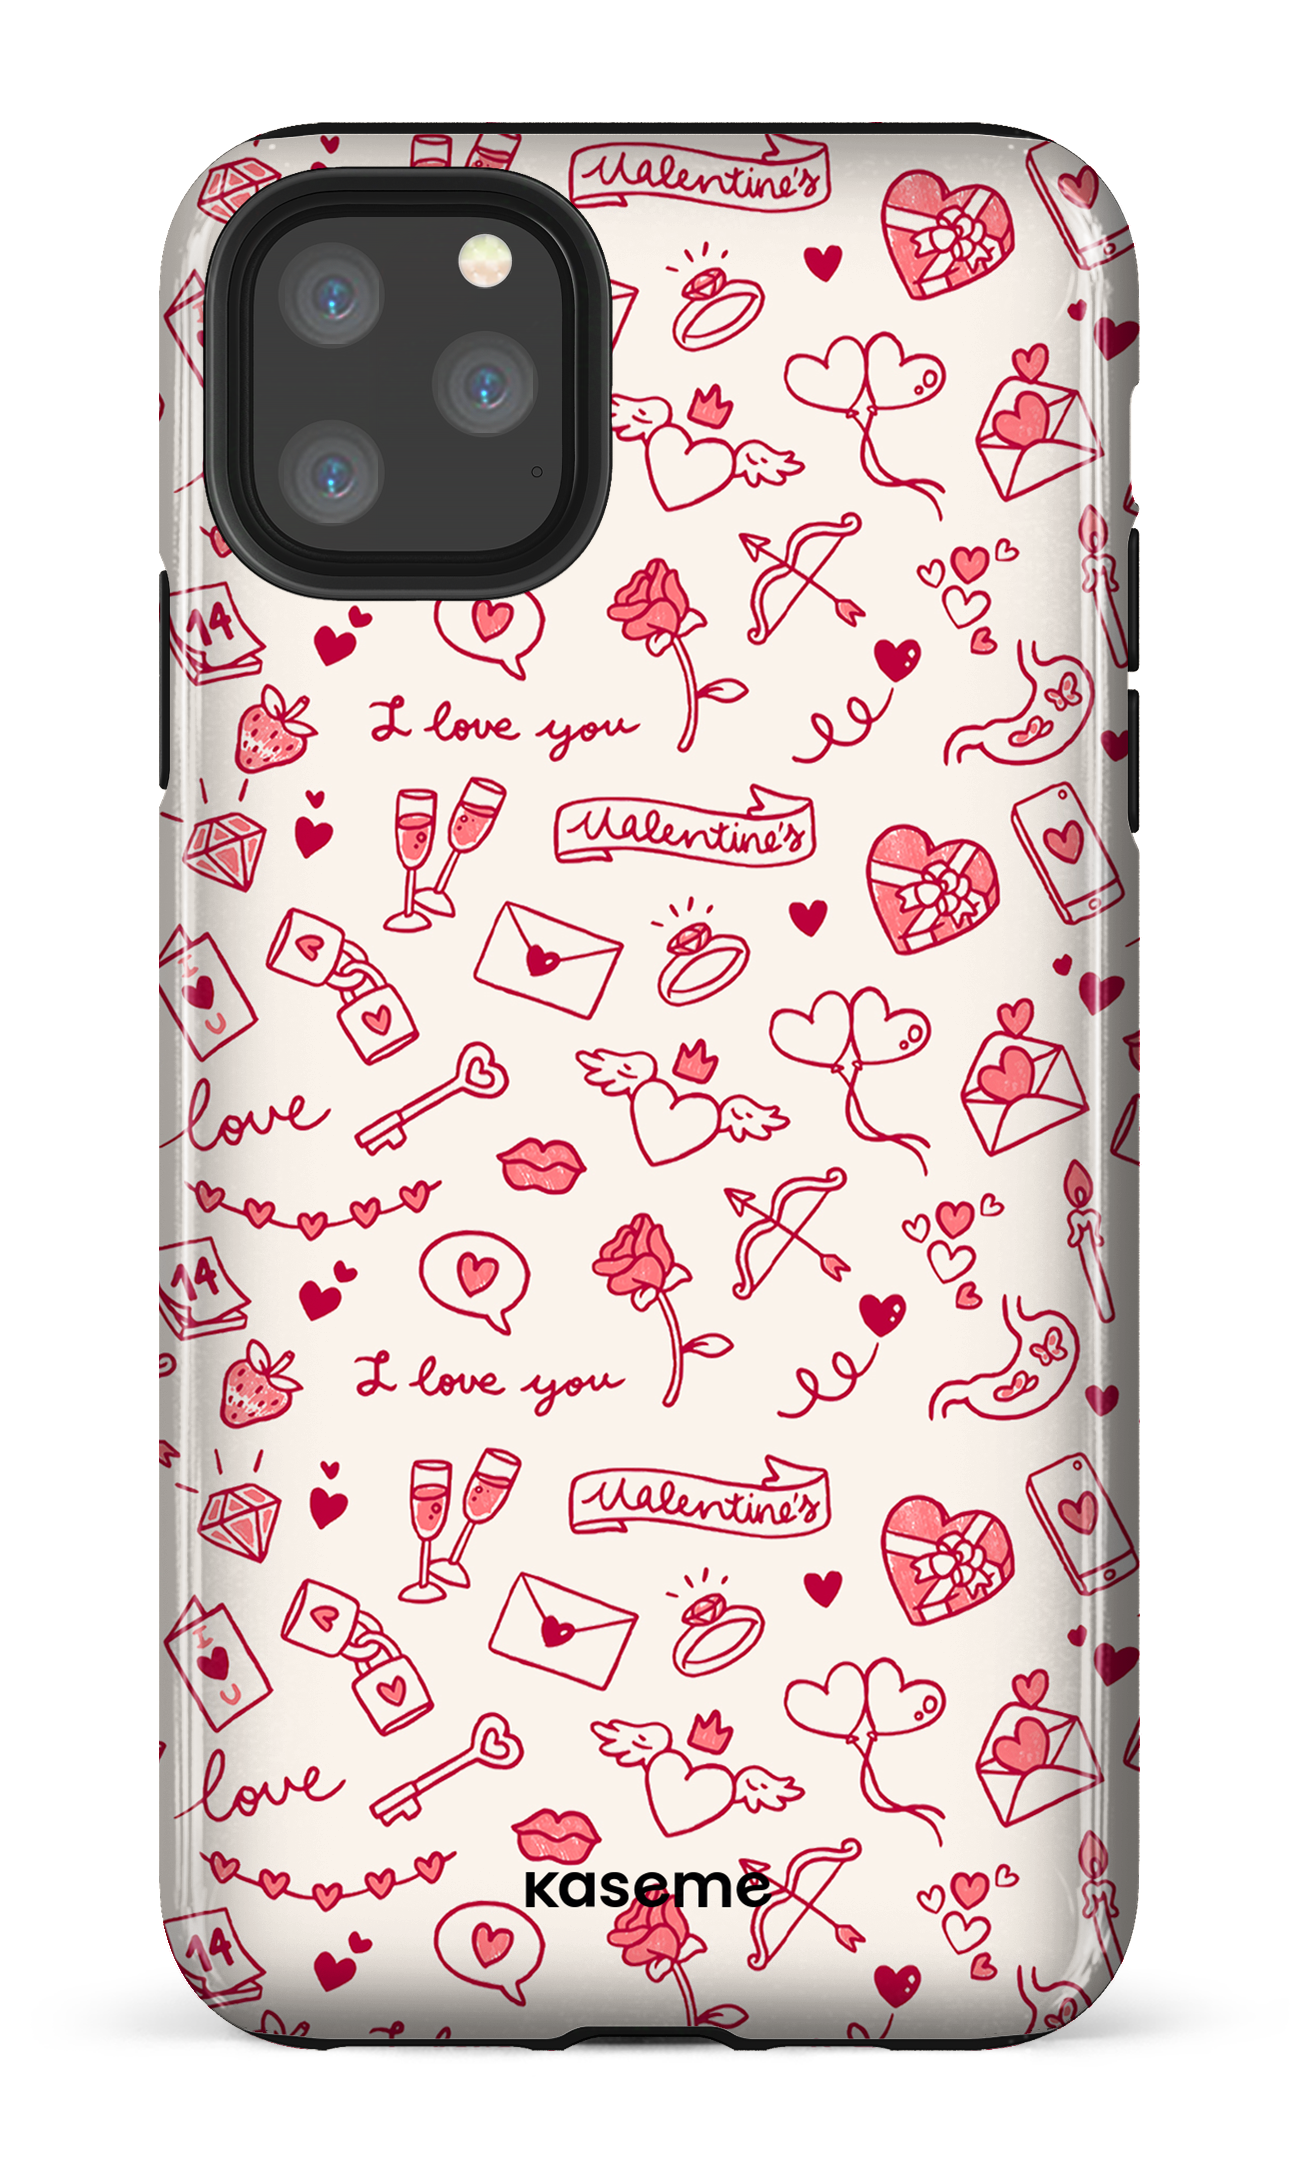 My Valentine - iPhone 11 Pro Max